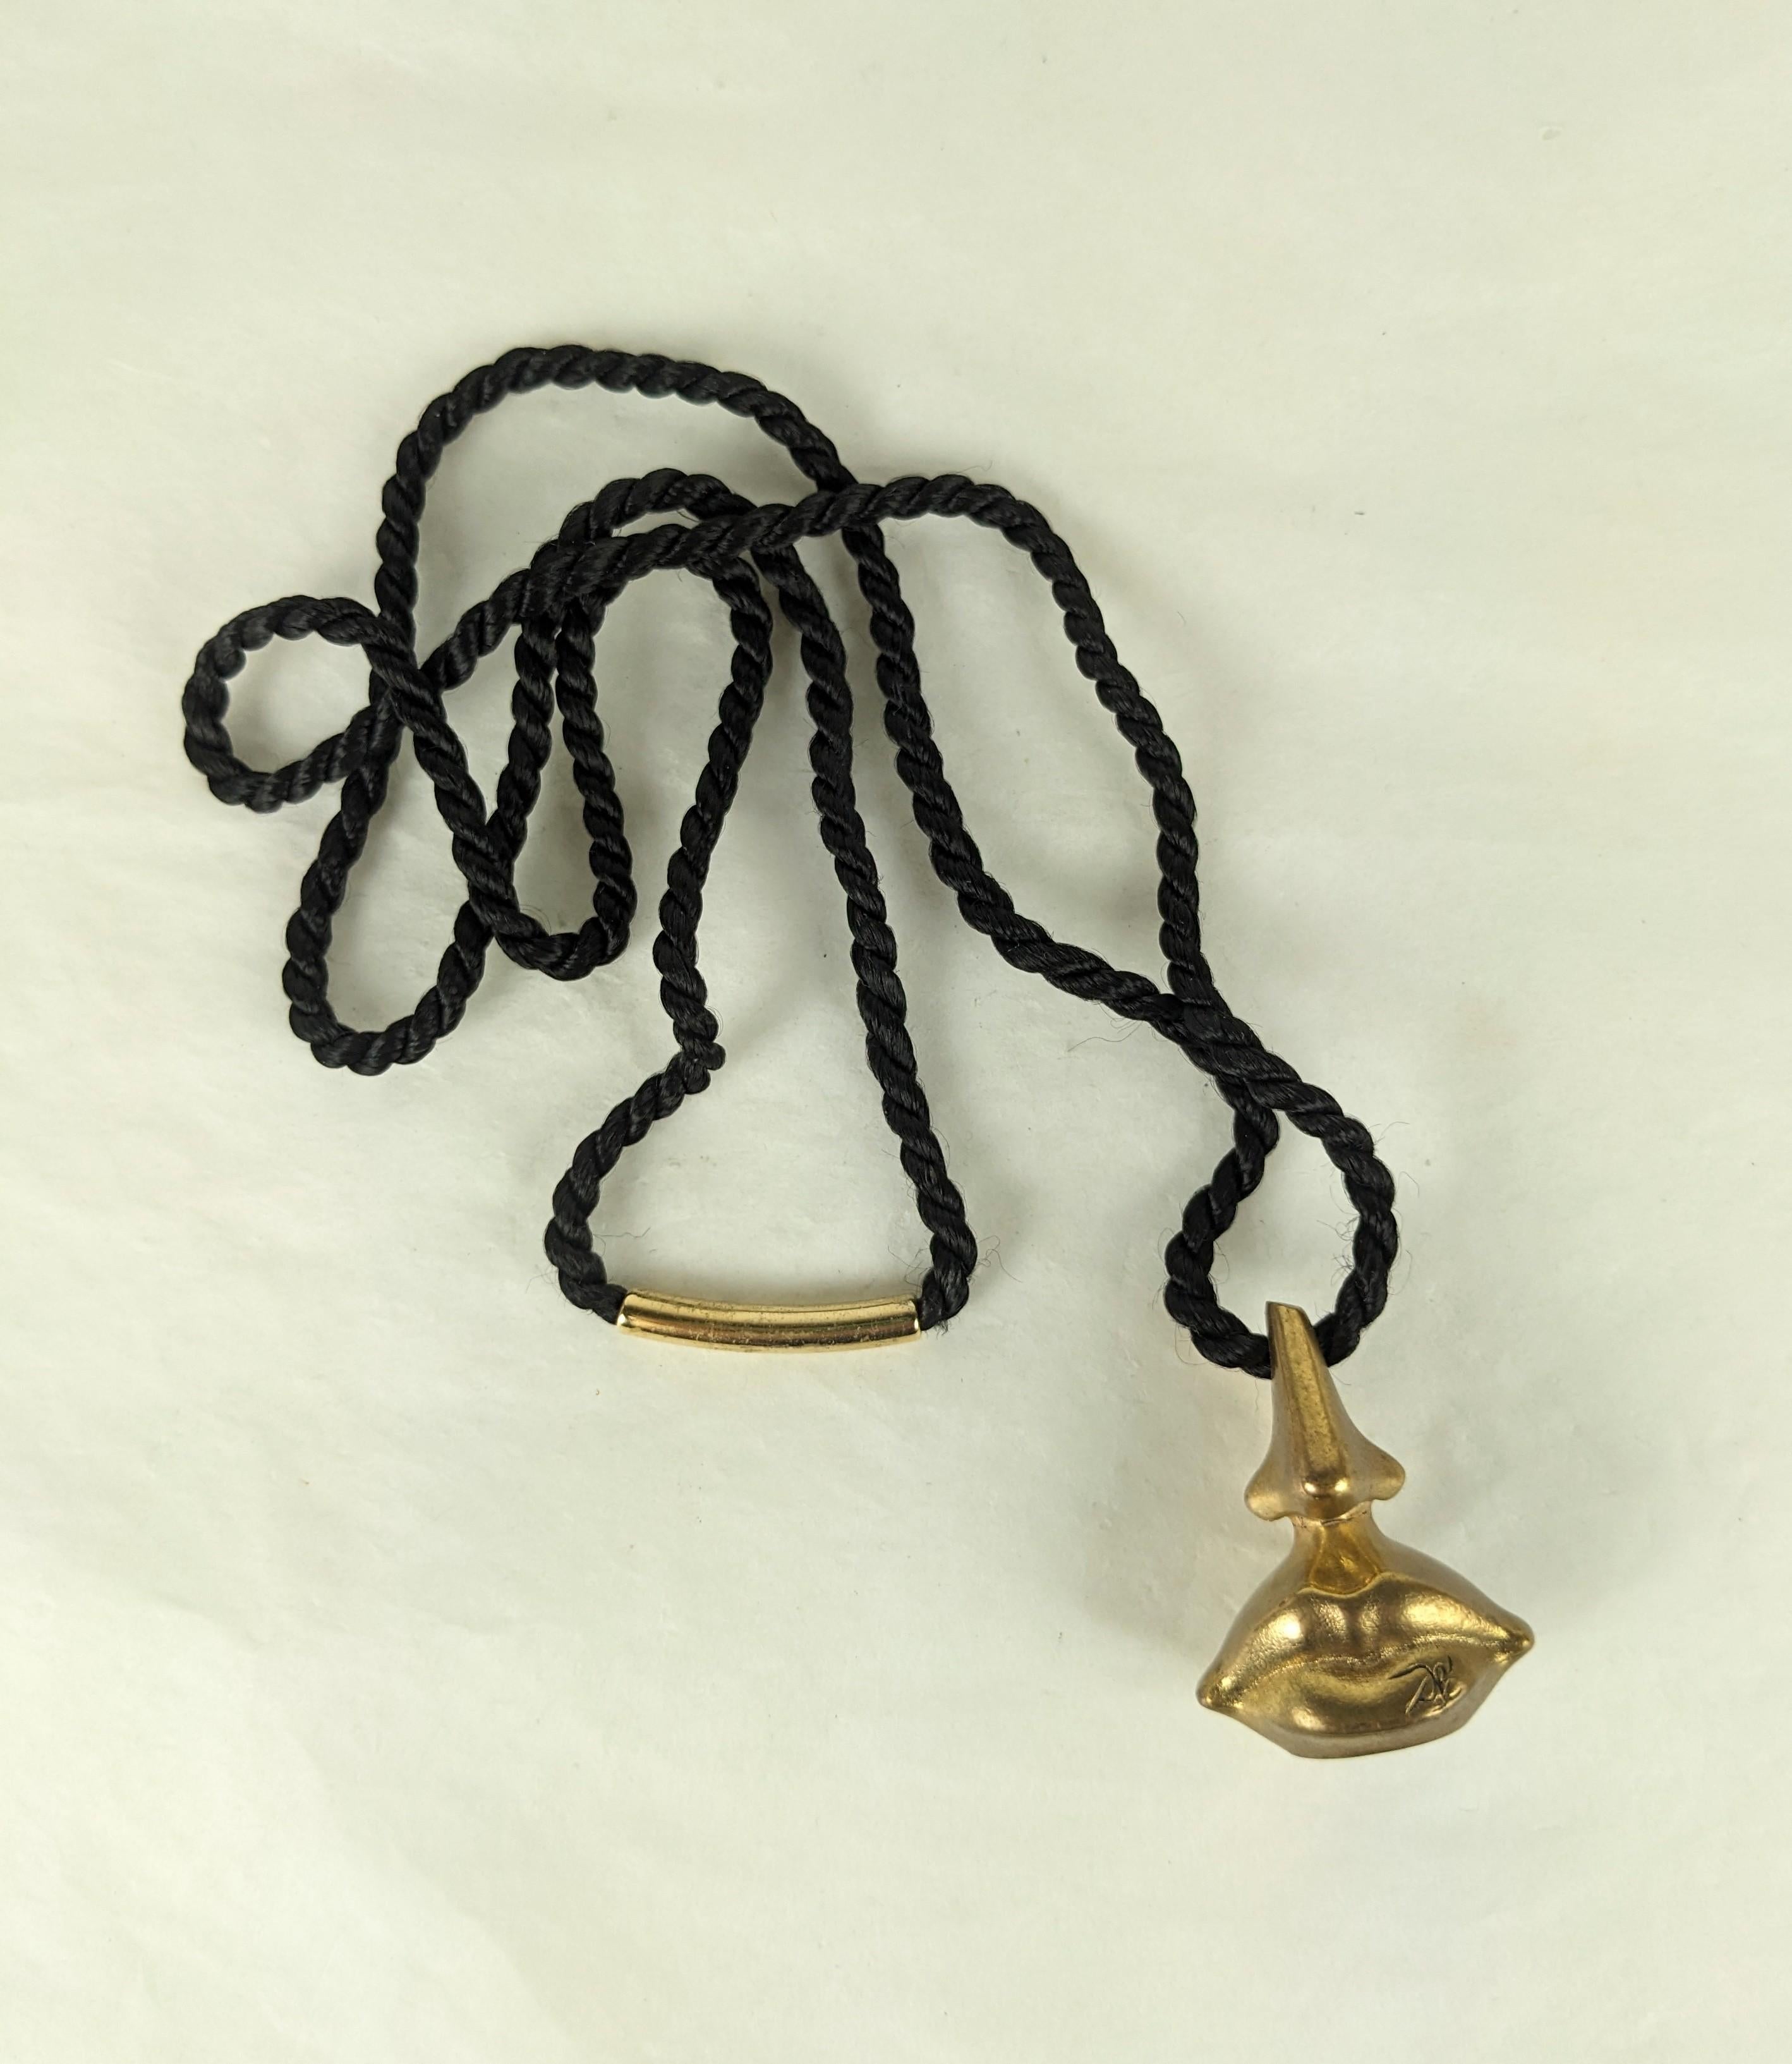 Parfums Salvador Dali Aphrodite Pendant Necklace, created for the release of Salvador Dali's 